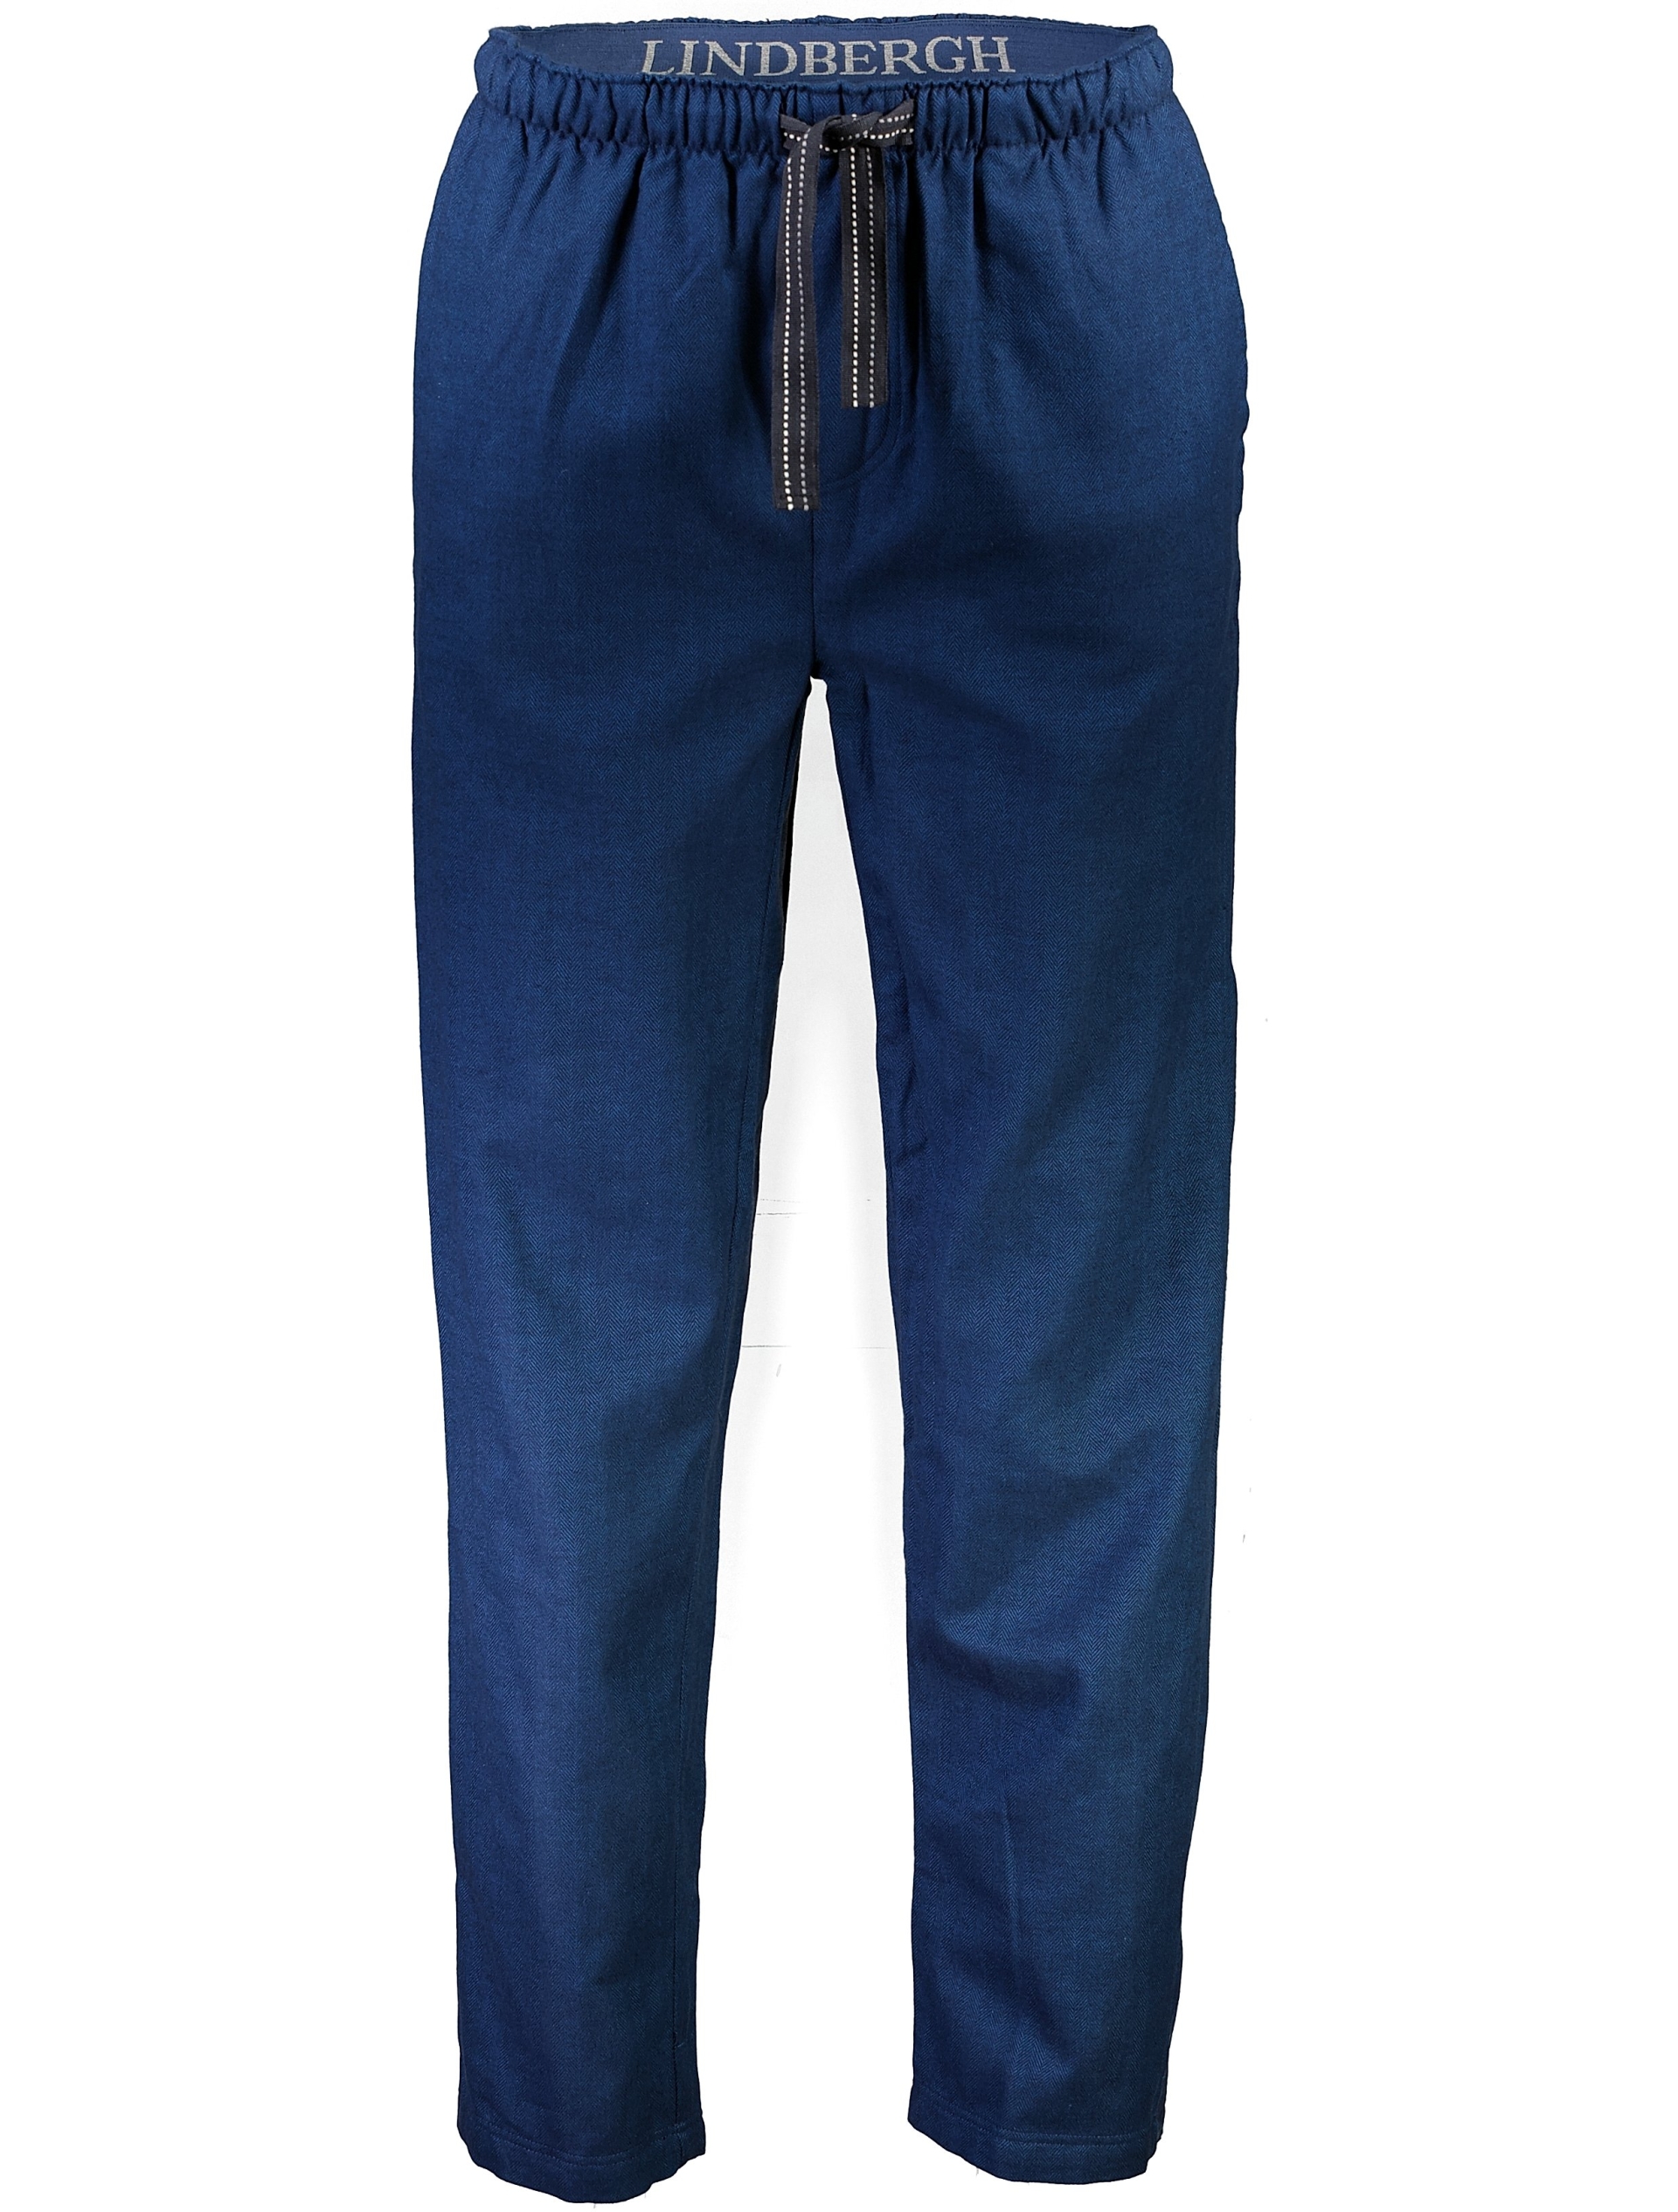 Lindbergh Pyjamas blå / navy